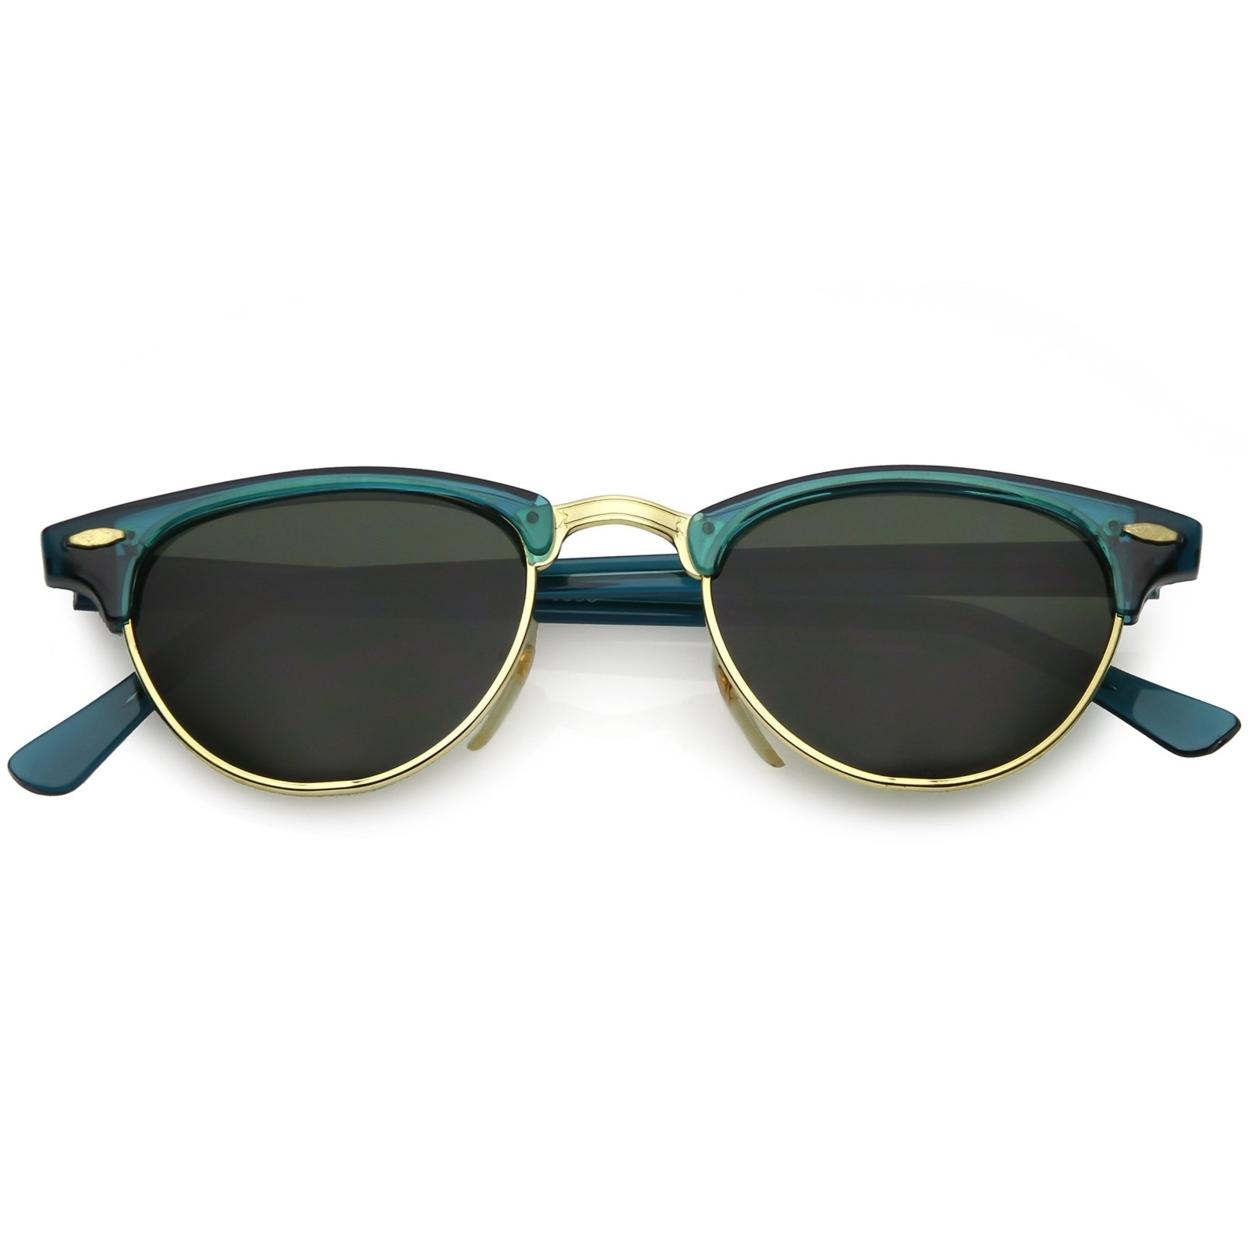 True Vintage Horn Rimmed Semi Rimless Sunglasses Green Tinted Oval Lens 49mm - Blue / Green